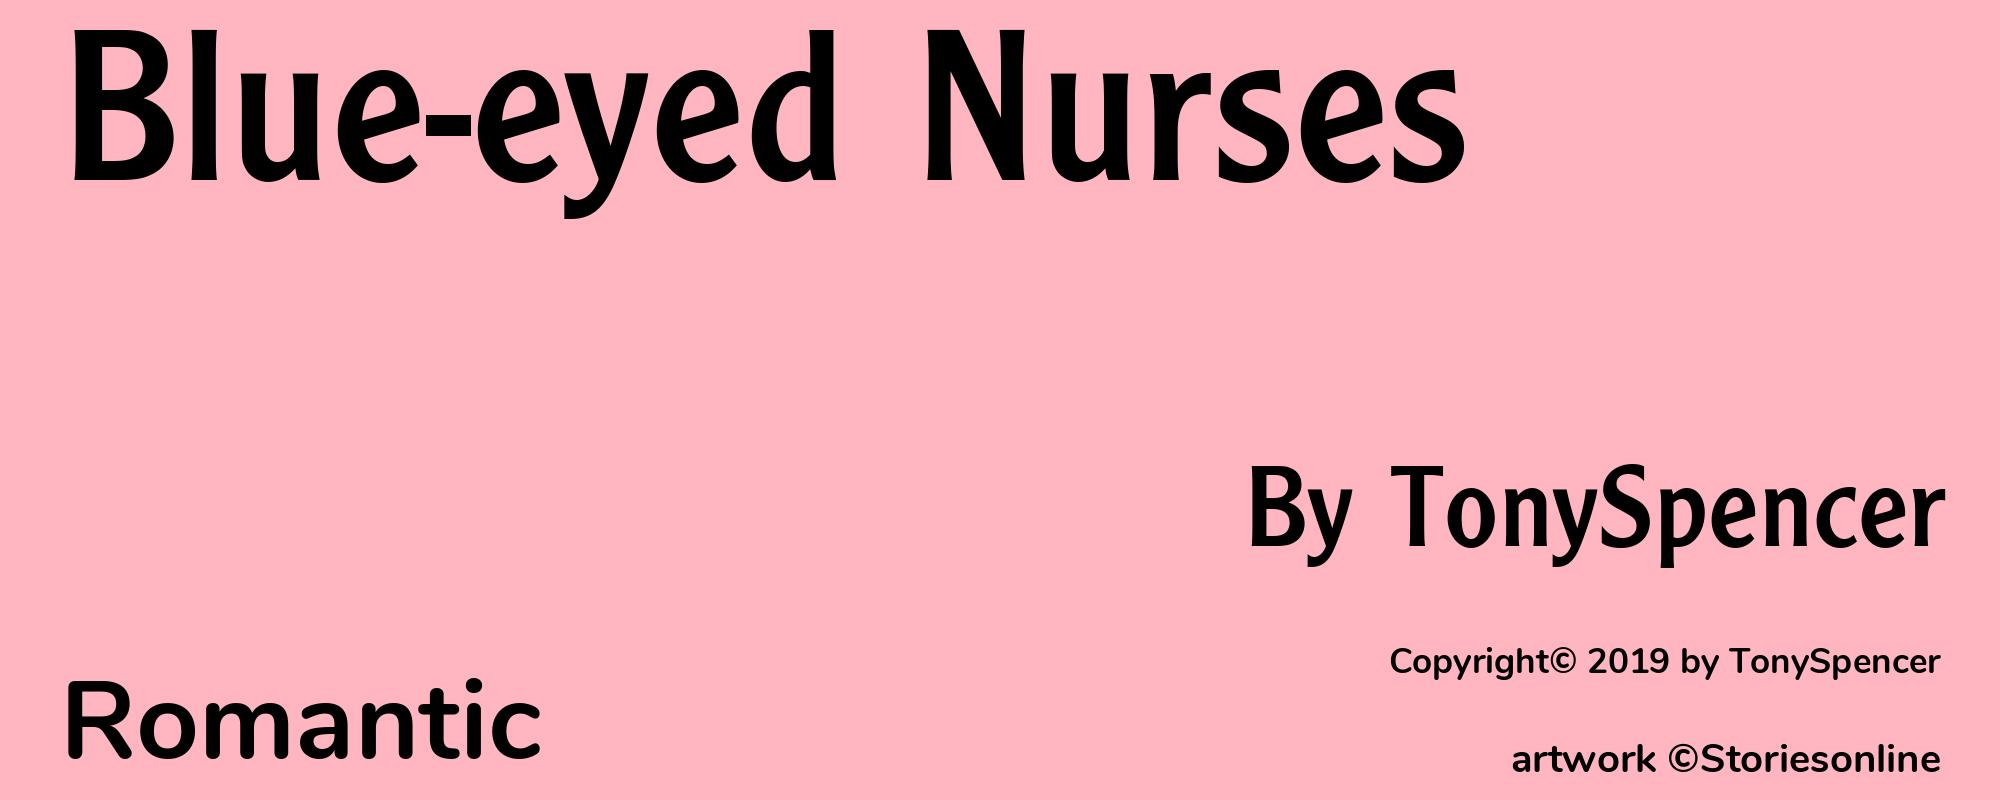 Blue-eyed Nurses - Cover